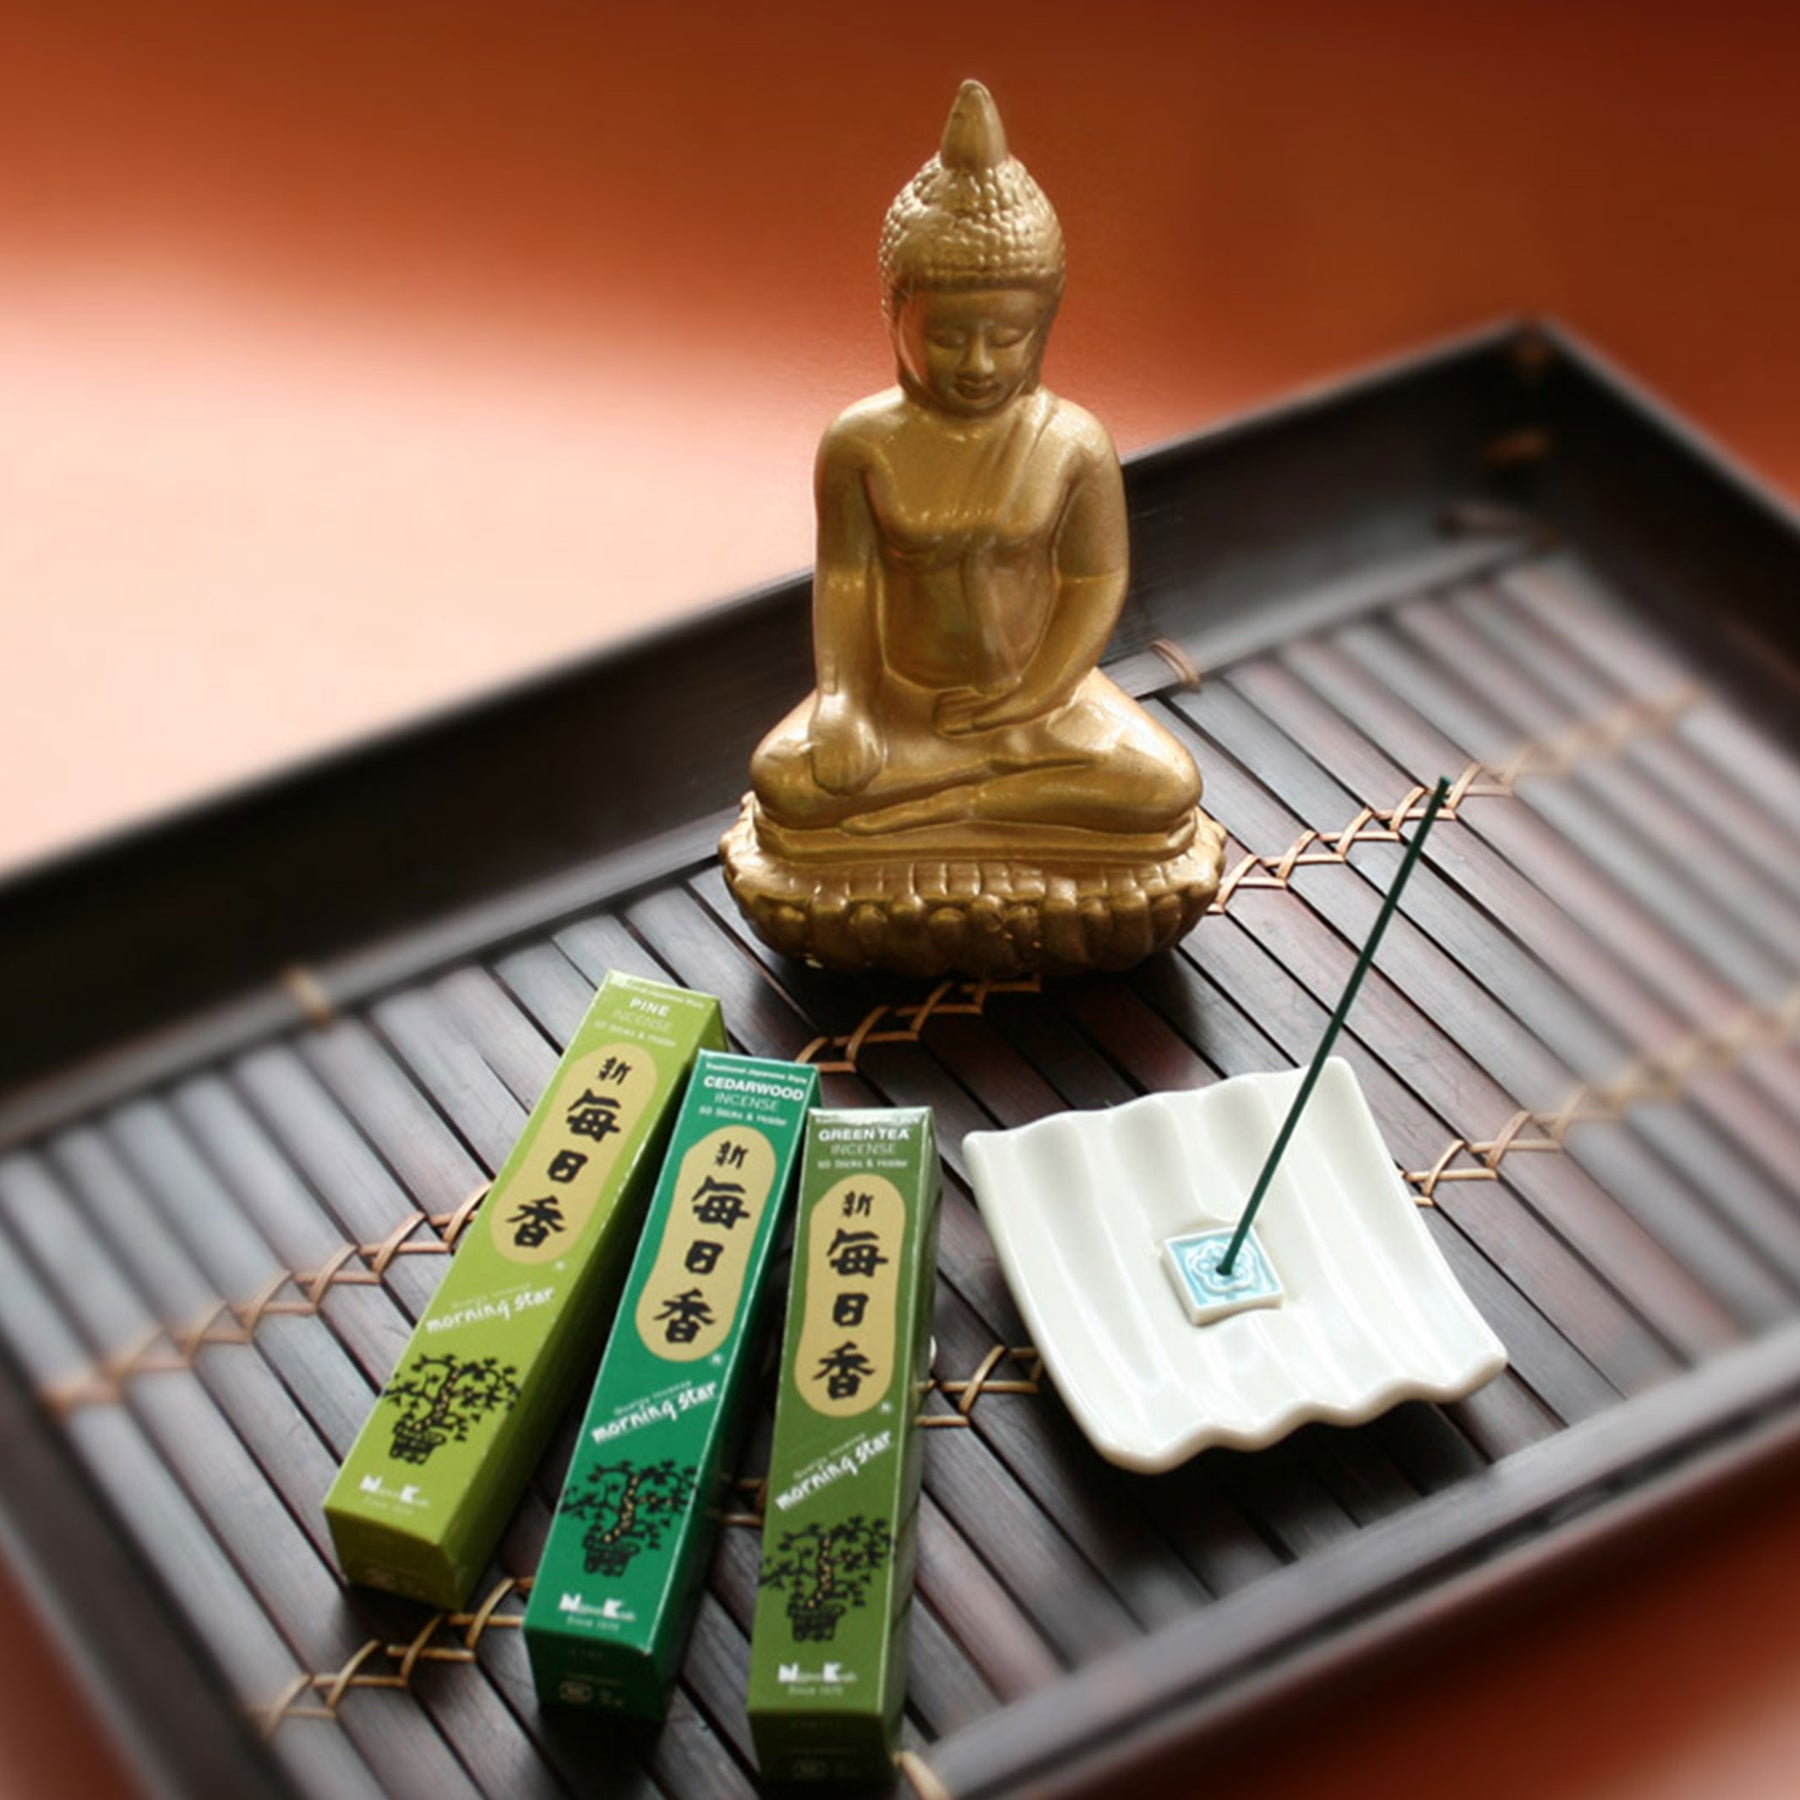 MORNING STAR Incense - SANDALWOOD 200 sticks $9.40  NIPPON KODO Japanese  Quality Incense Since 1575 –